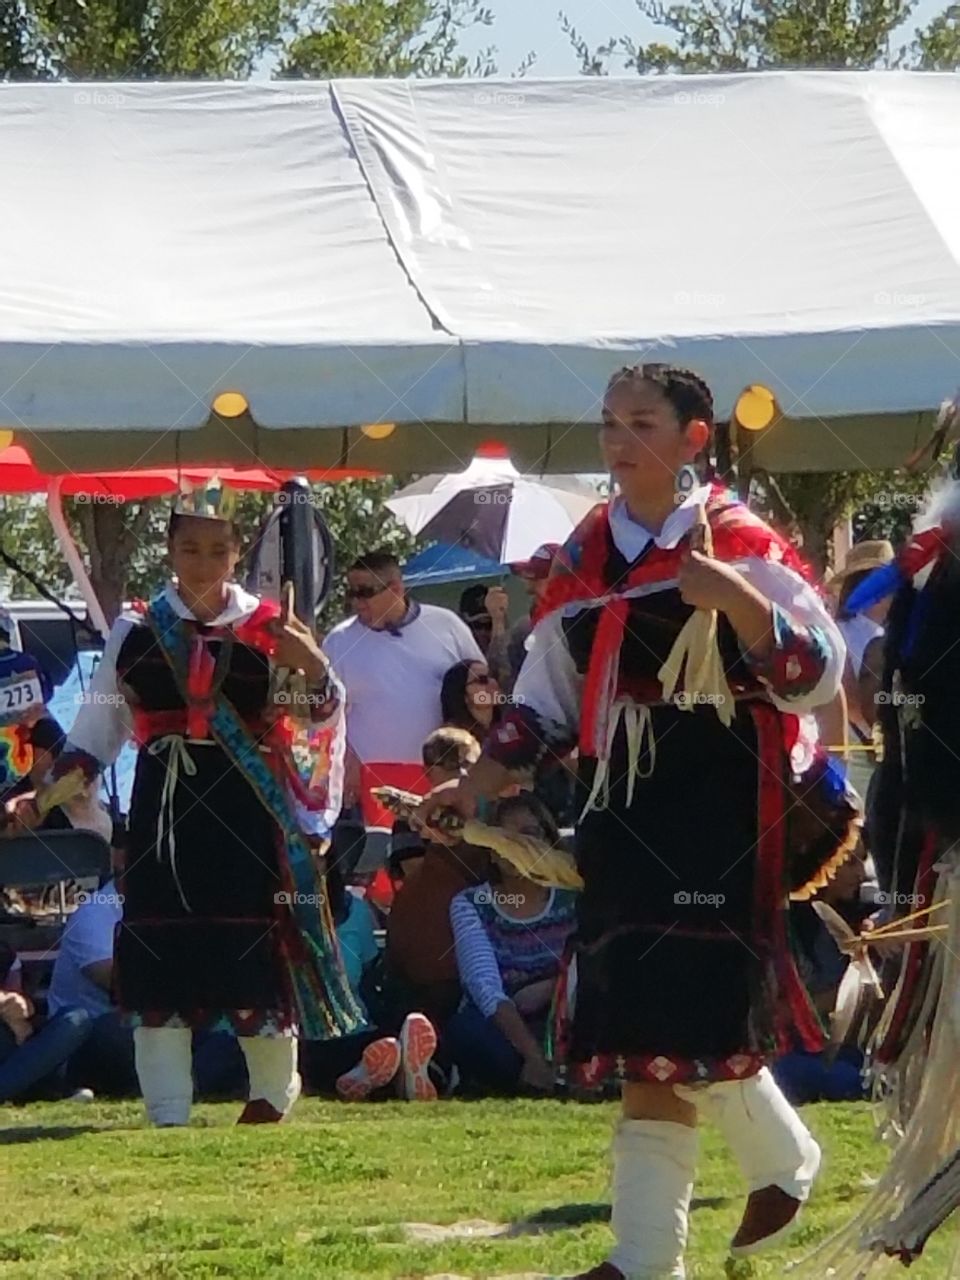 Native American dancers